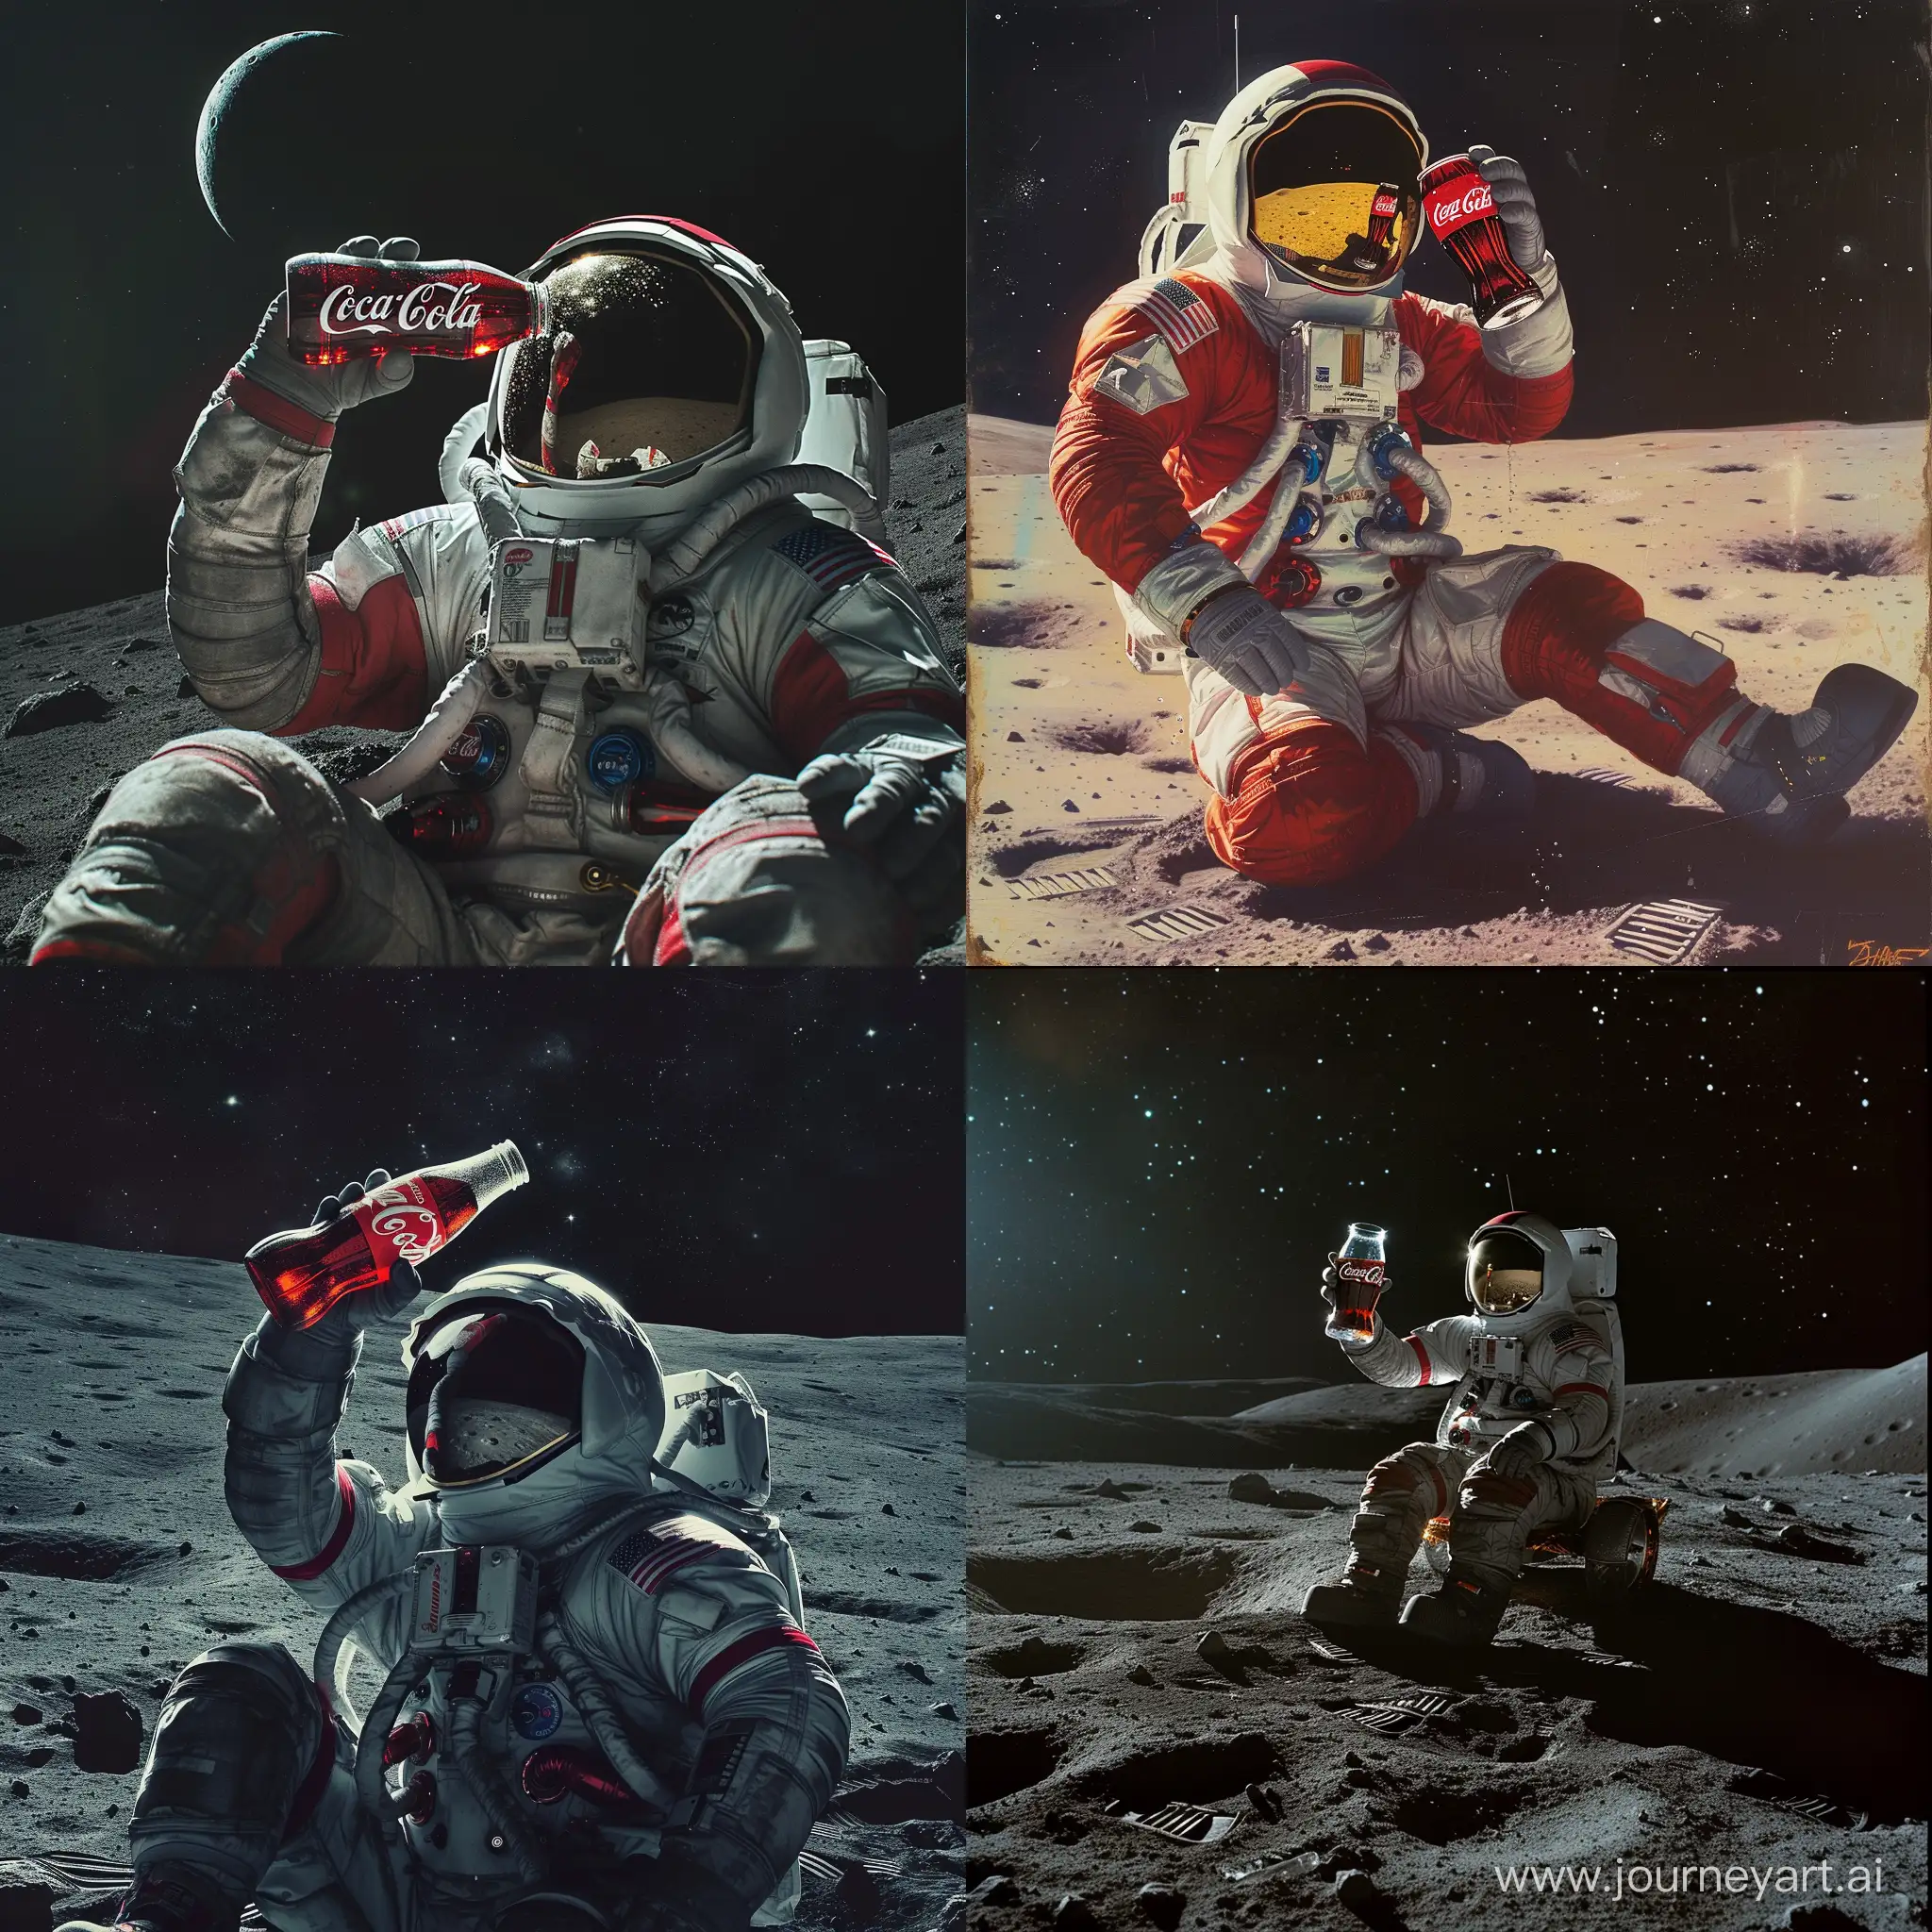 Lunar-Refreshment-HyperRealistic-Scene-of-a-Man-Enjoying-Coca-Cola-on-the-Moon